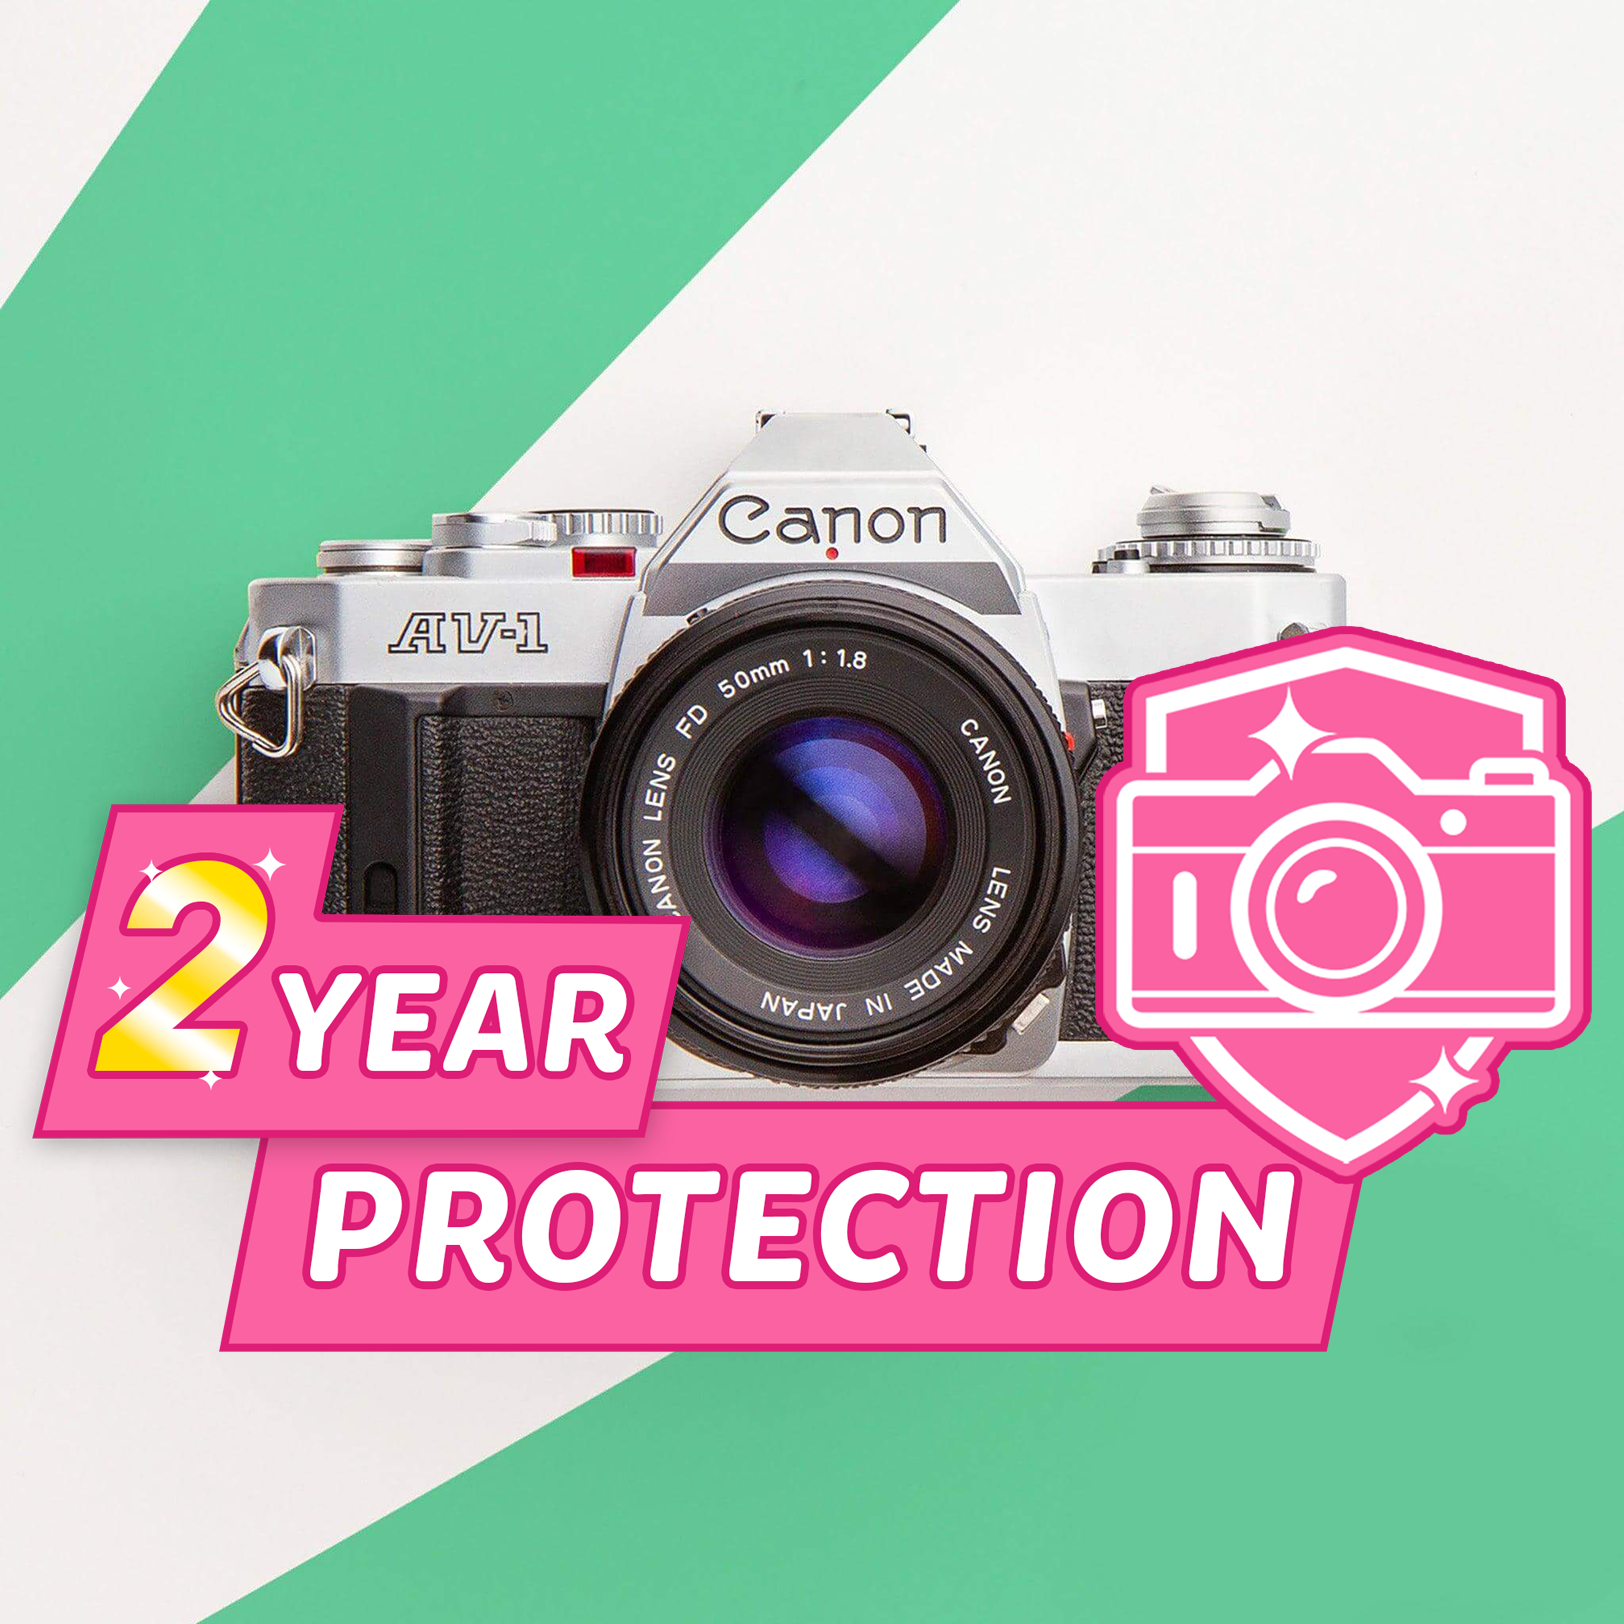 Camera Protection Plan for Canon AV-1